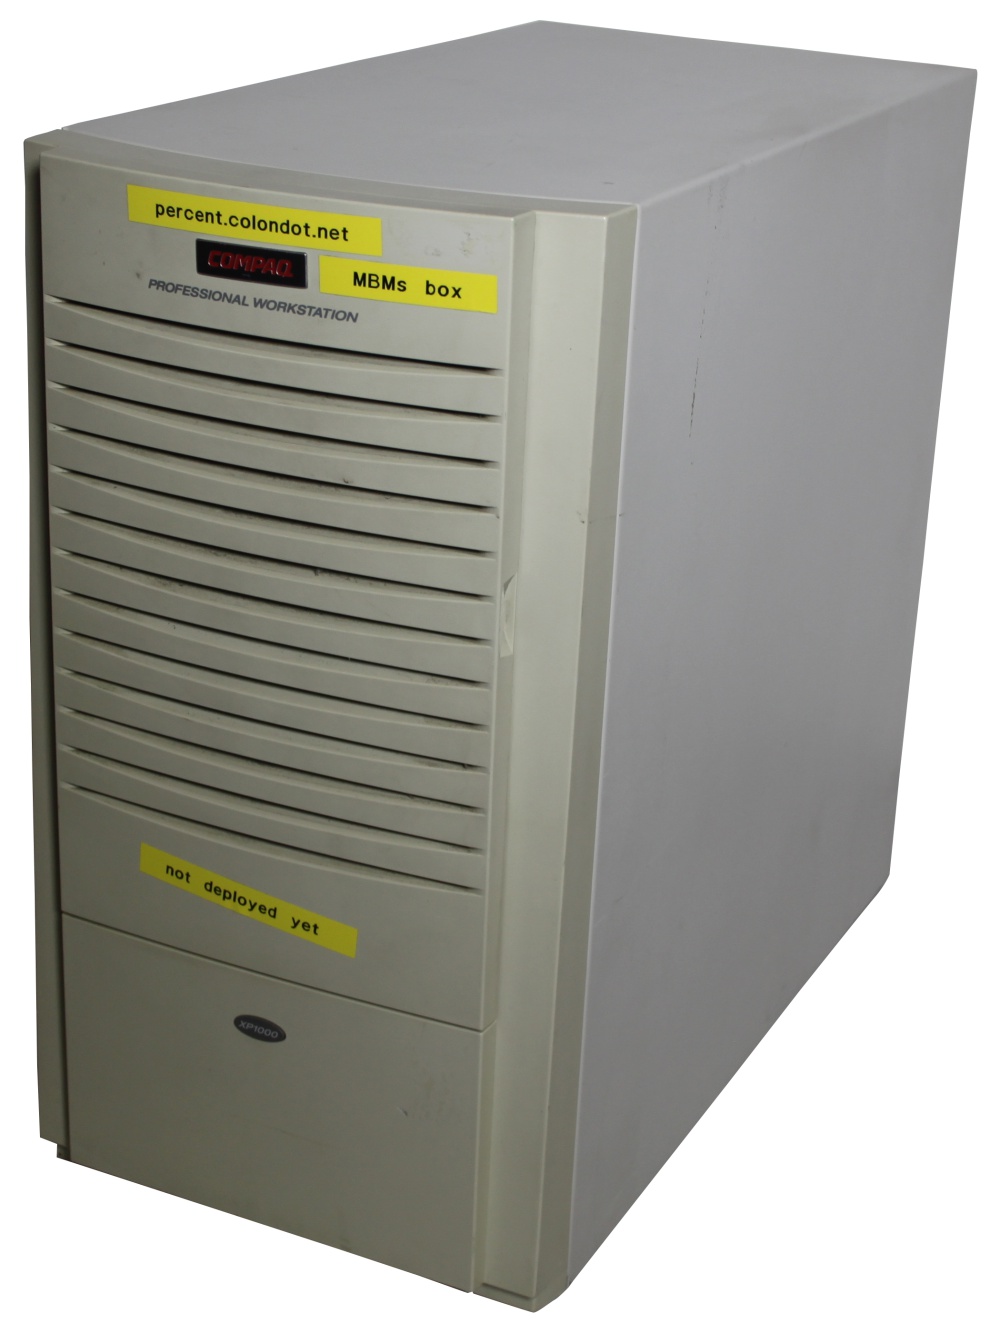 Compaq Professional Workstation XP1000